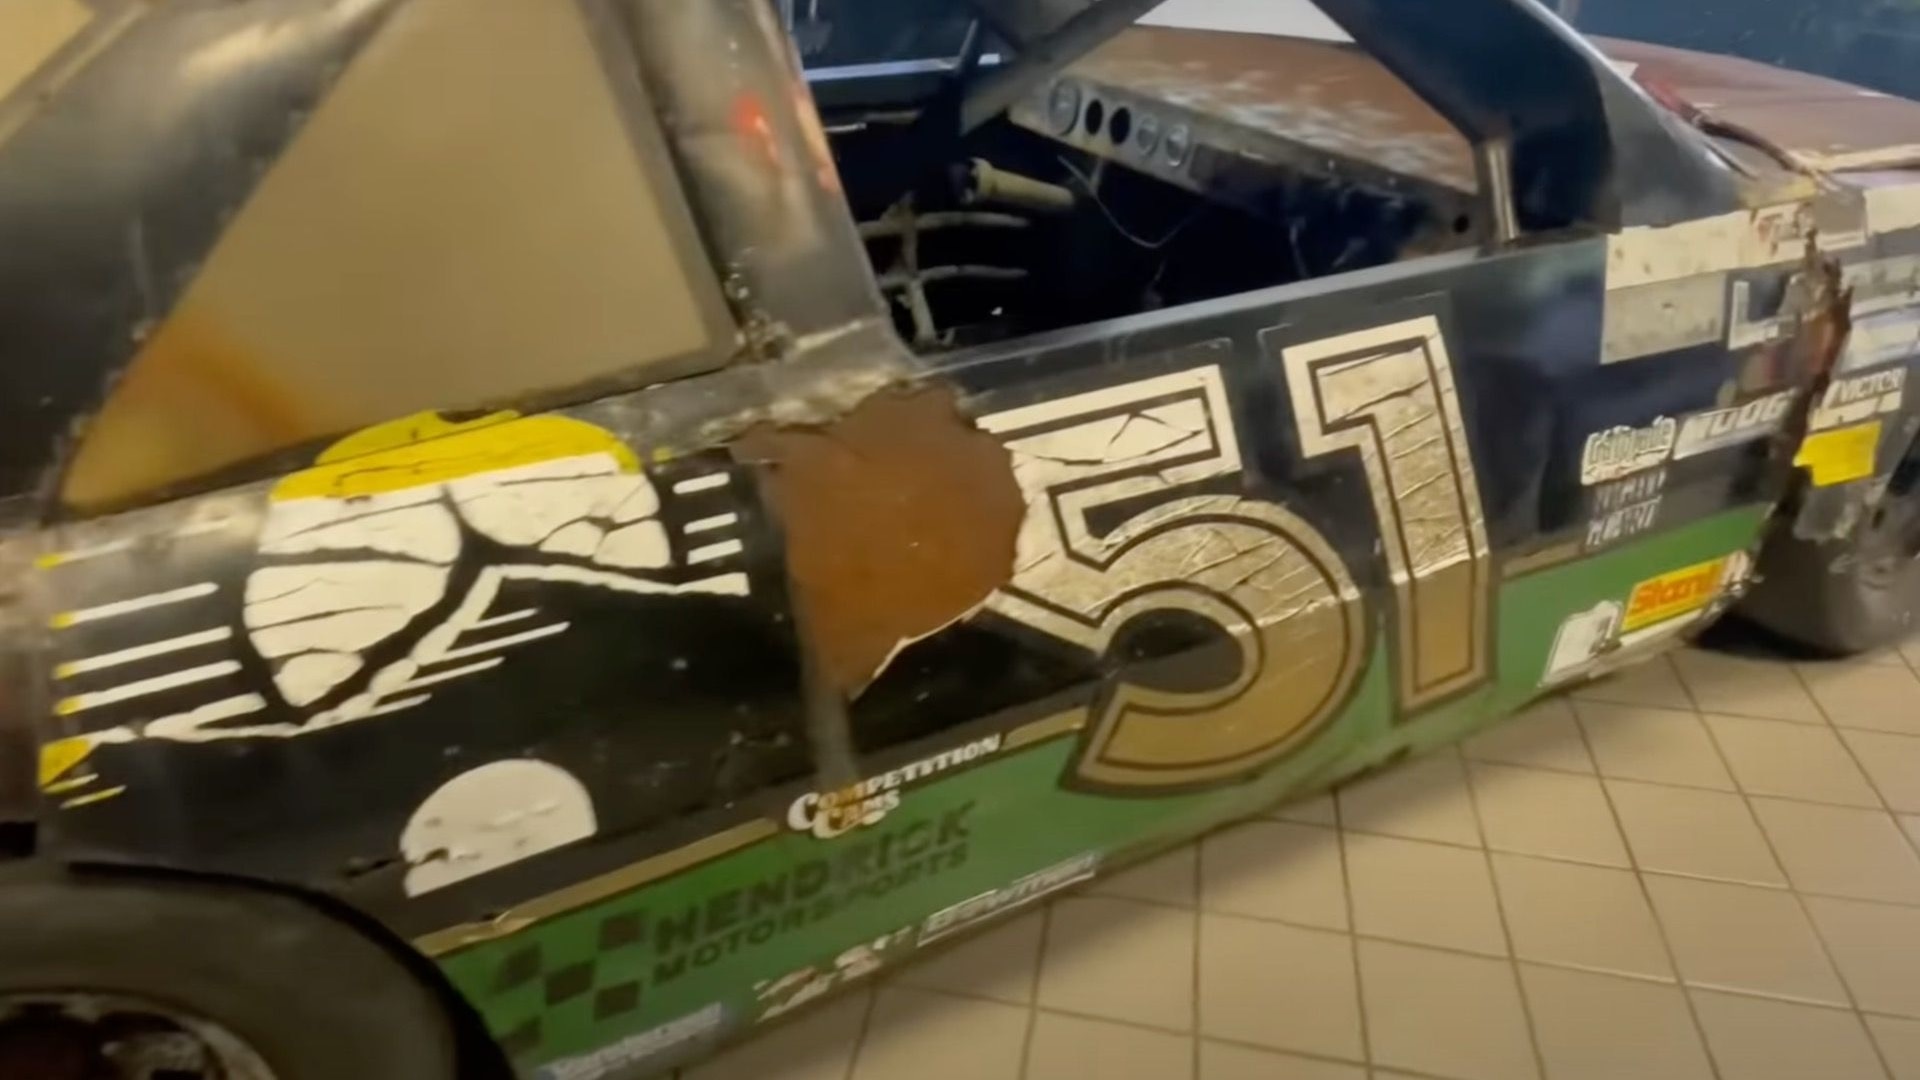 "Days of Thunder" NASCAR race car (via Coors Bandit on YouTube)